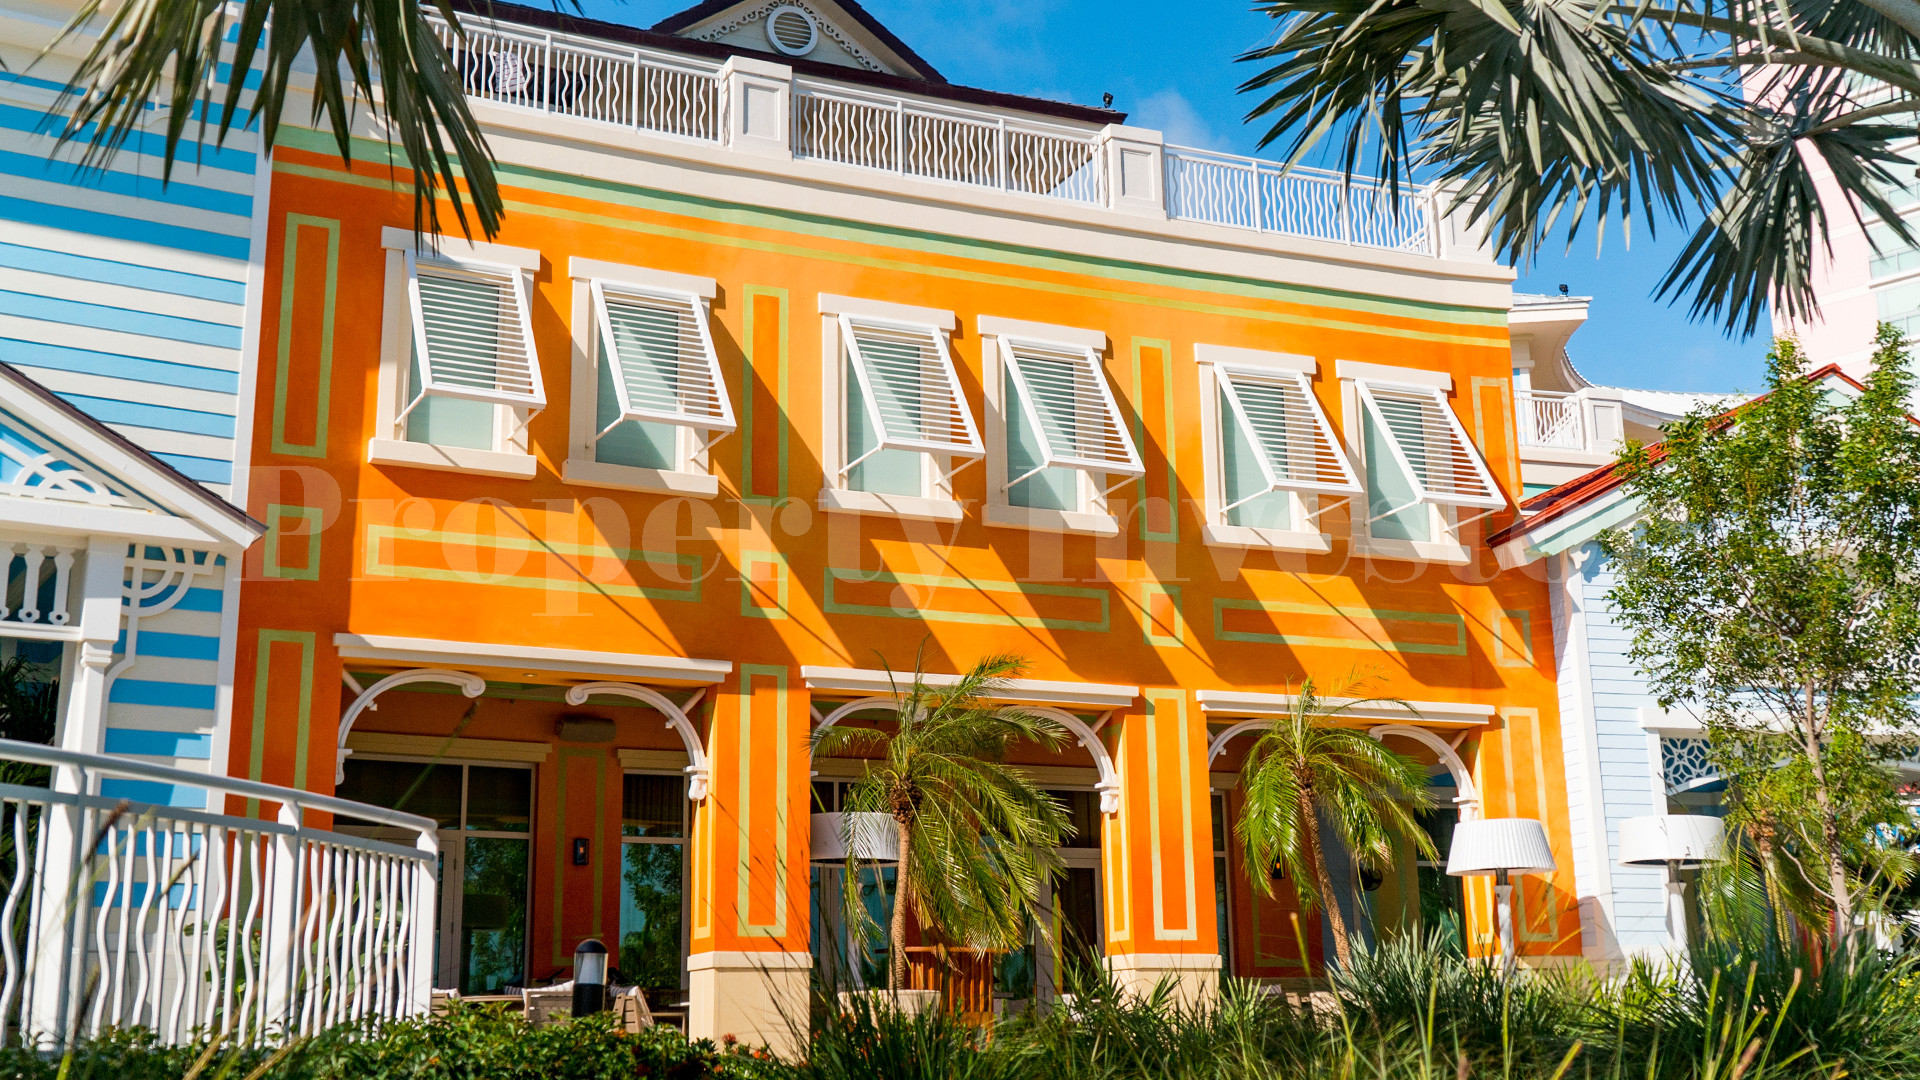 3 Bedroom Condo-Hotel Residence in the Bahamas (Residence 225)